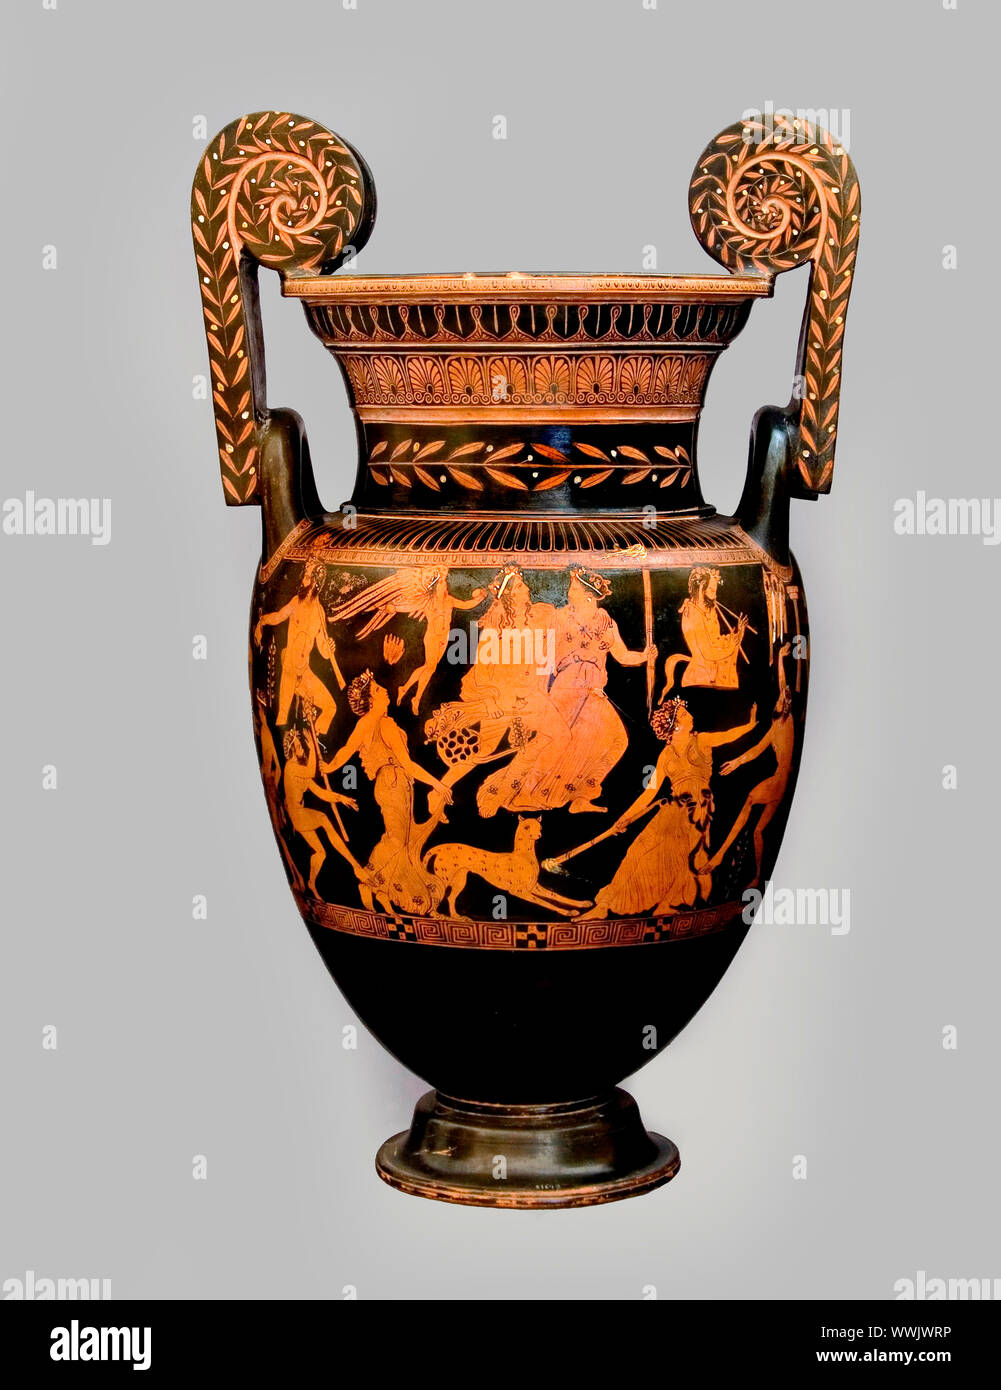 The Pronomos Vase, c. 400 BC. Found in the Collection of Museo Archeologico Nazionale di Napoli. Stock Photo